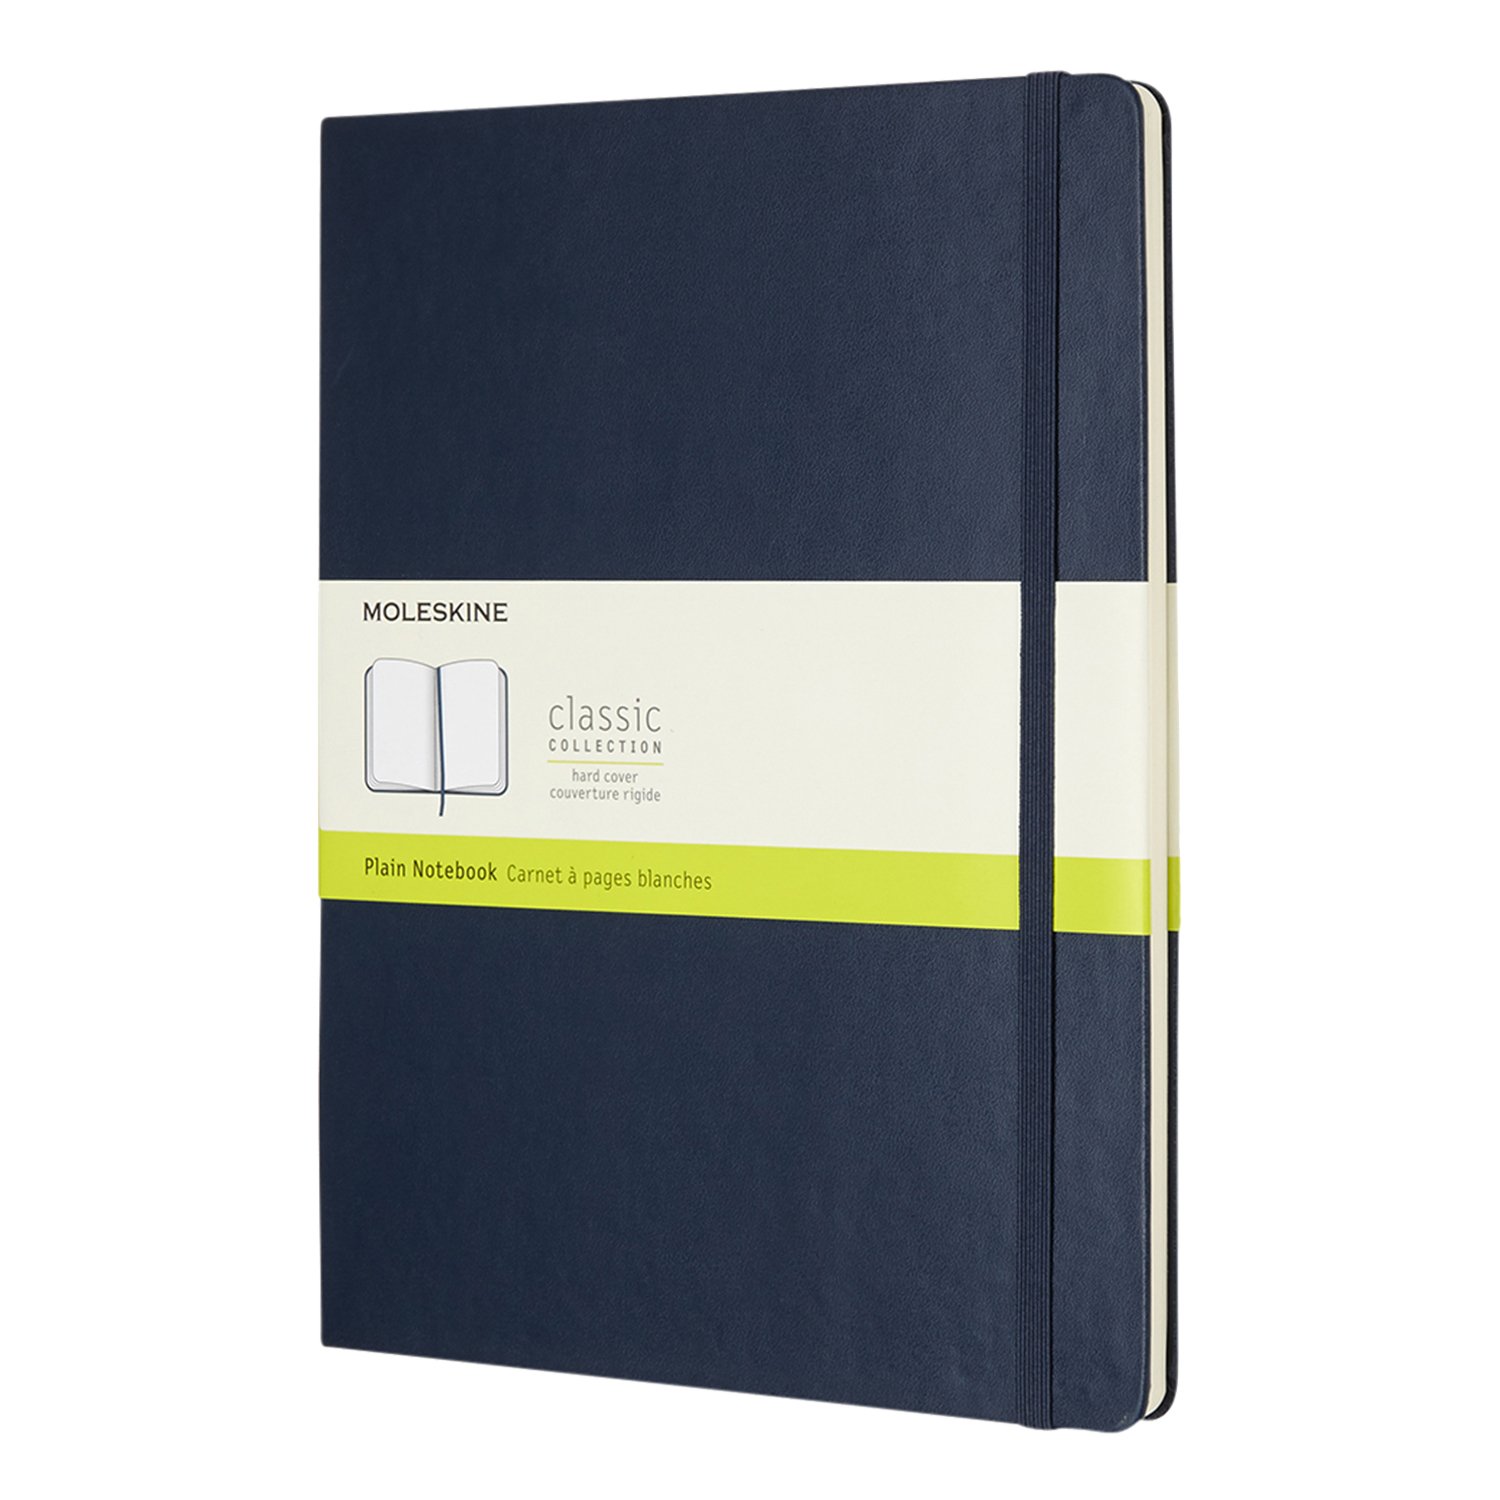 volgens Methode ondernemer Moleskine A4 hard cover notebook, plain | PrintSimple